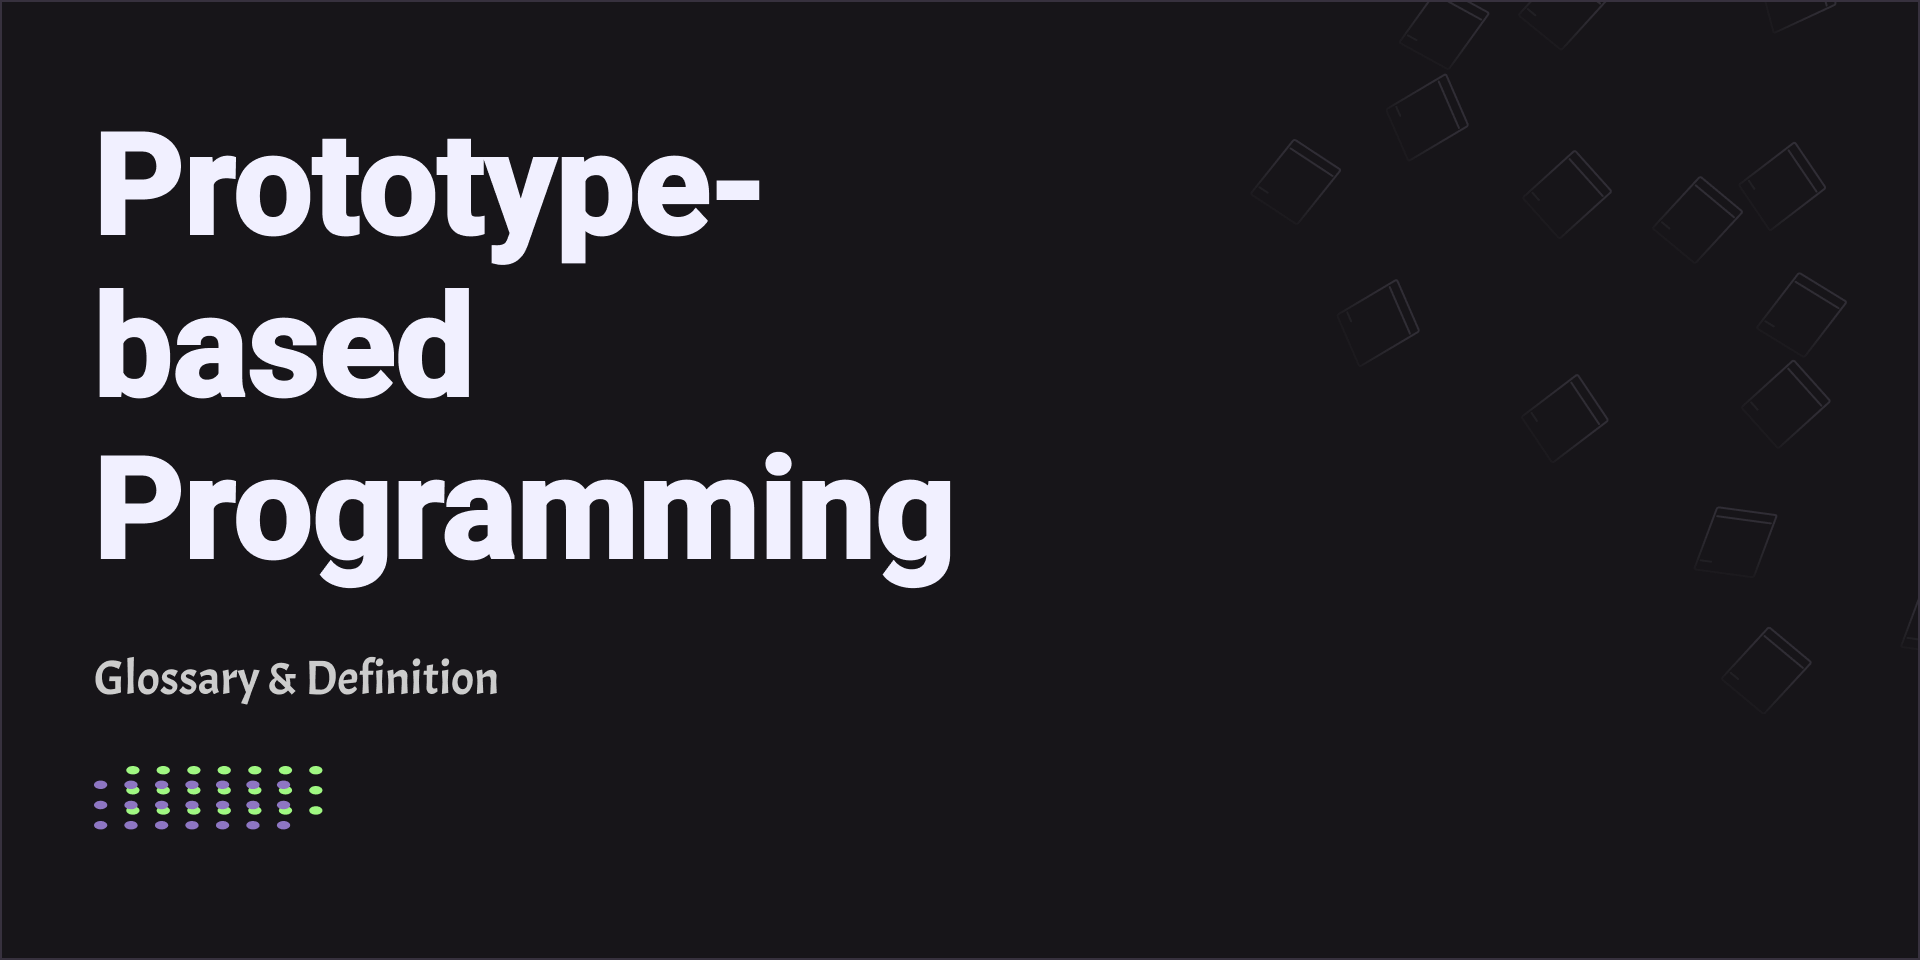 Prototype-based Programming